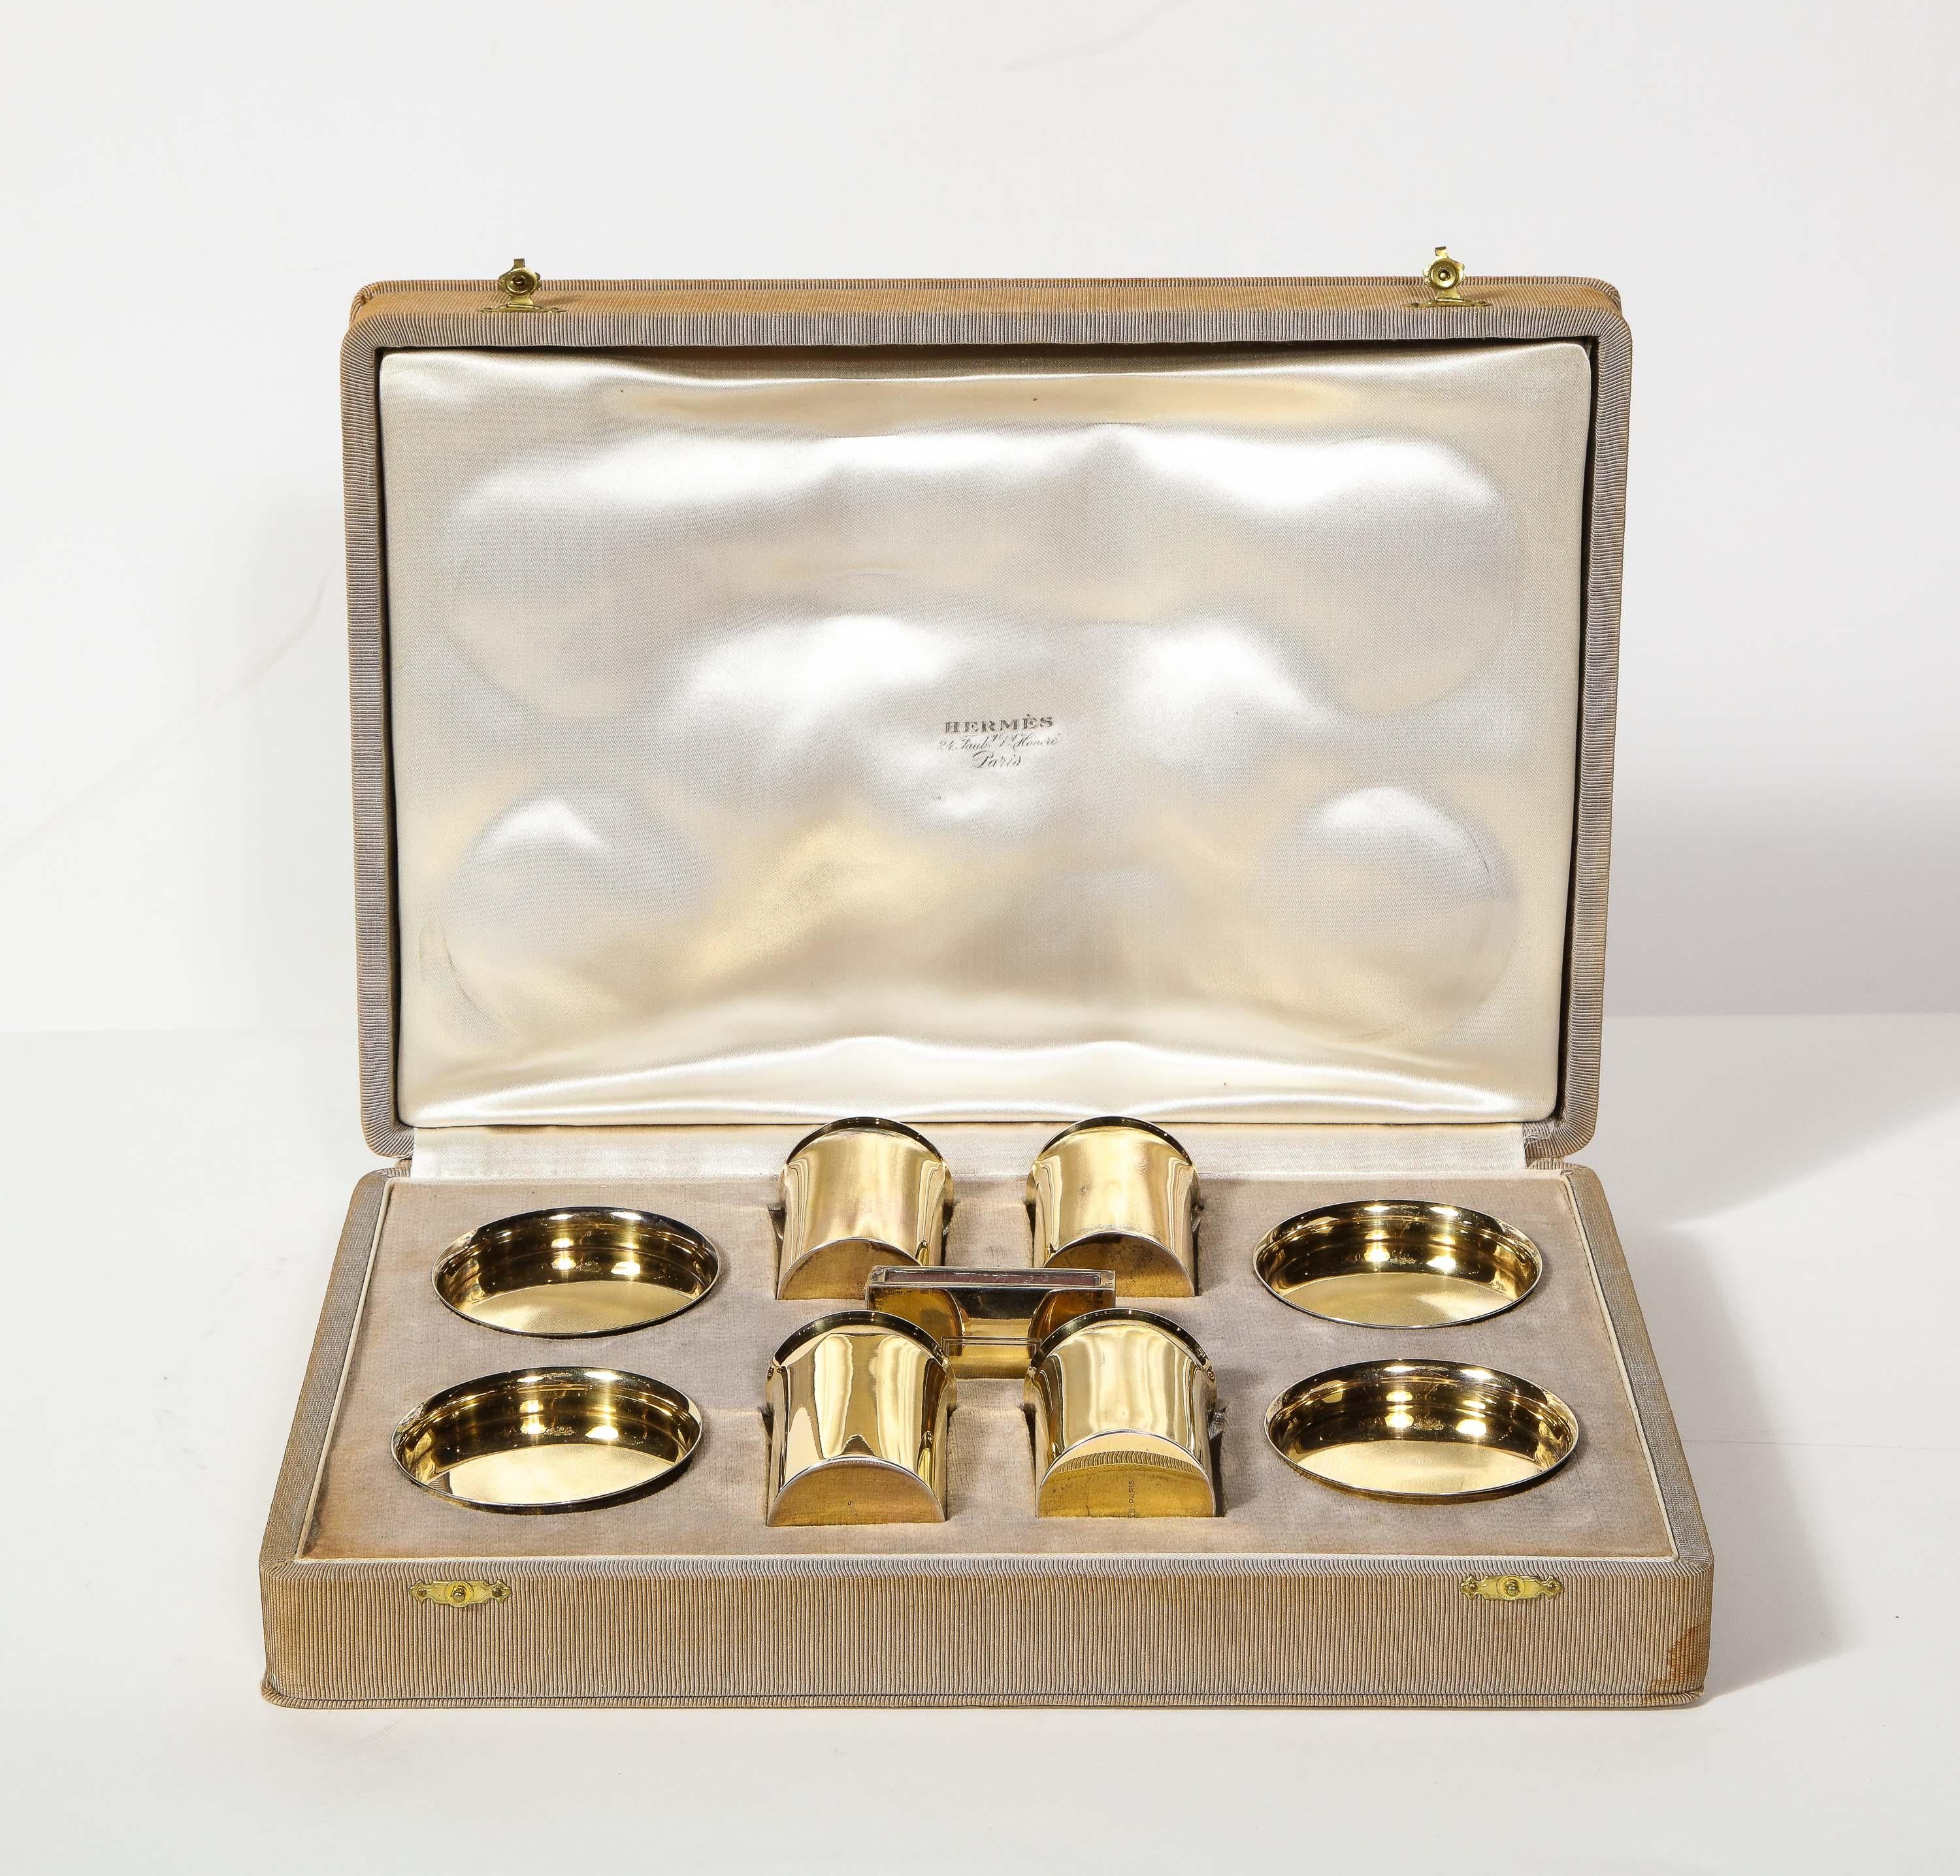 Art Deco Hermes Paris & Ravinet d'Enfert, a Rare French Silver-Gilt Smoking Set